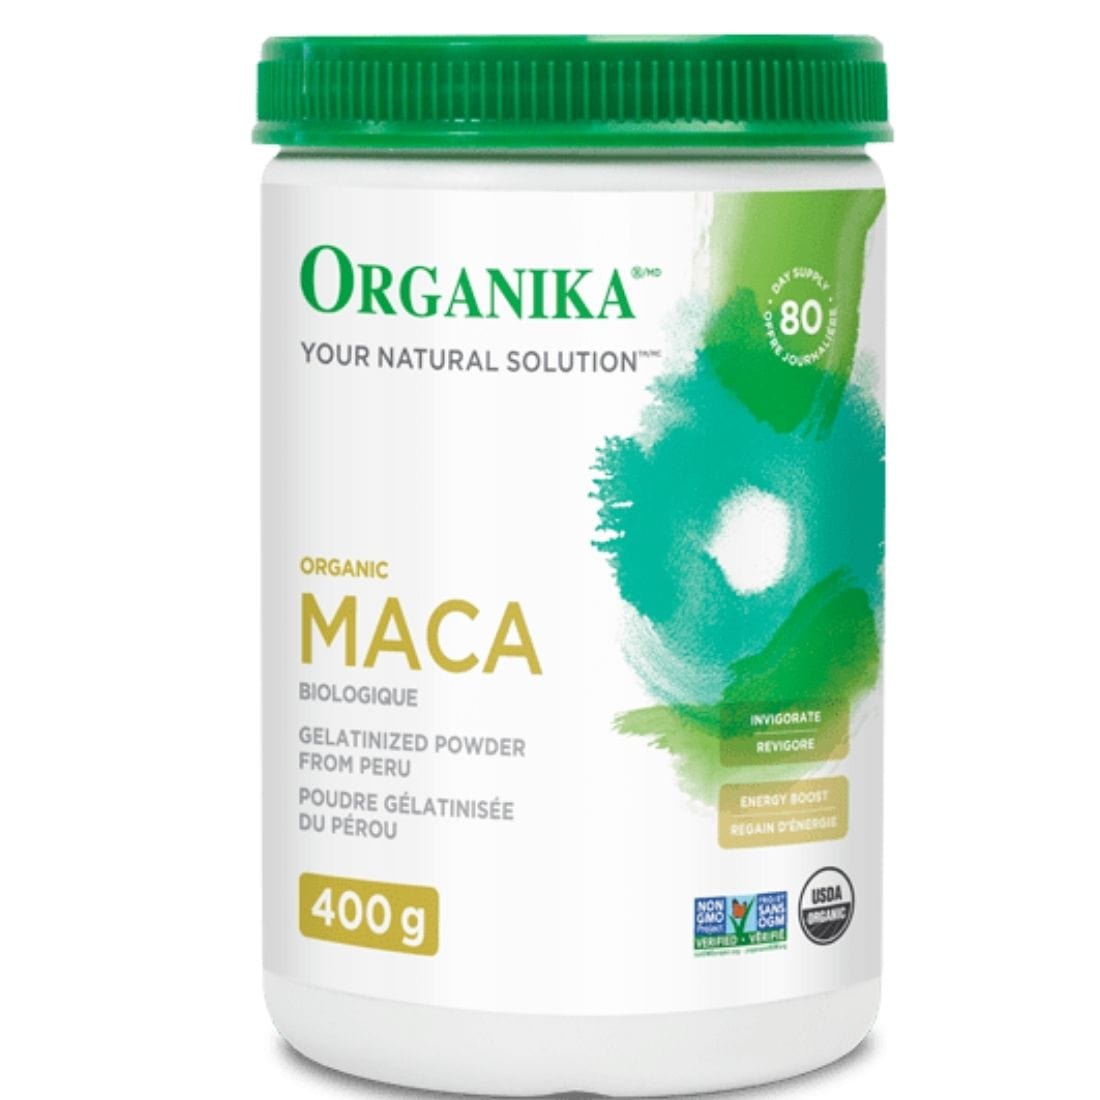 Organika Organic Maca Powder, 100% Natural Gelatinized Peruvian Maca Powder